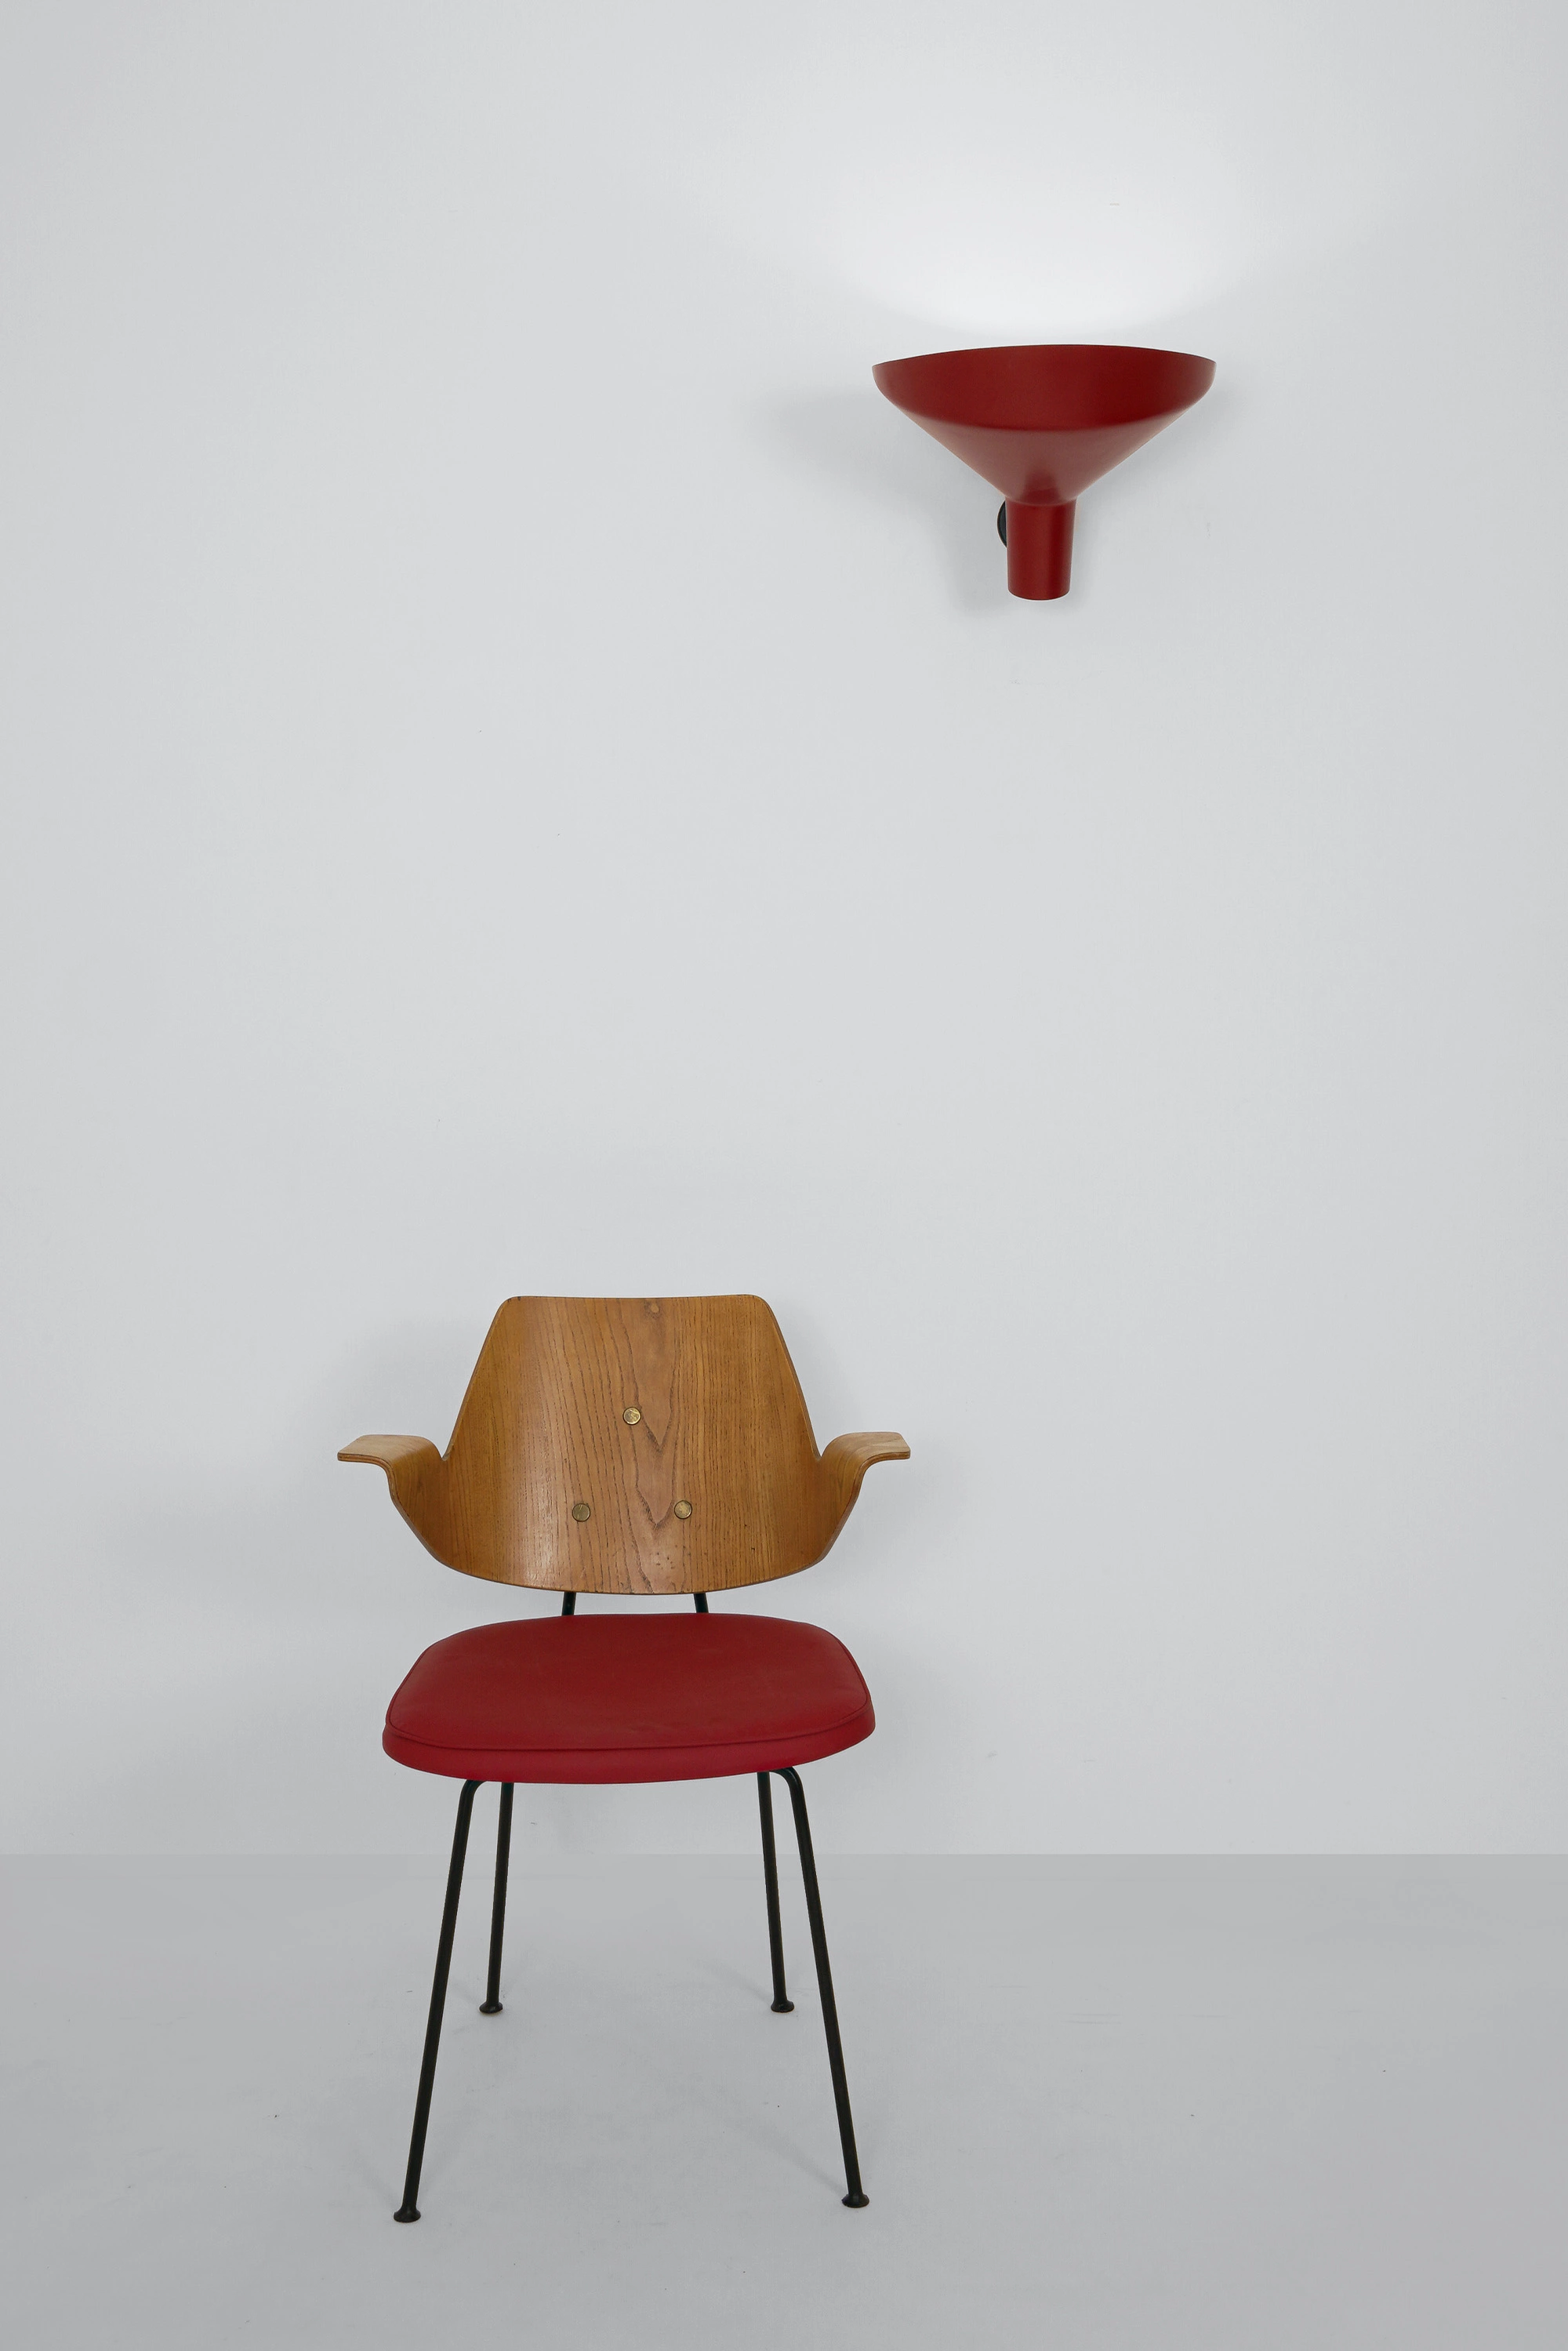 225 - Gino Sarfatti - Wall light - Galerie kreo